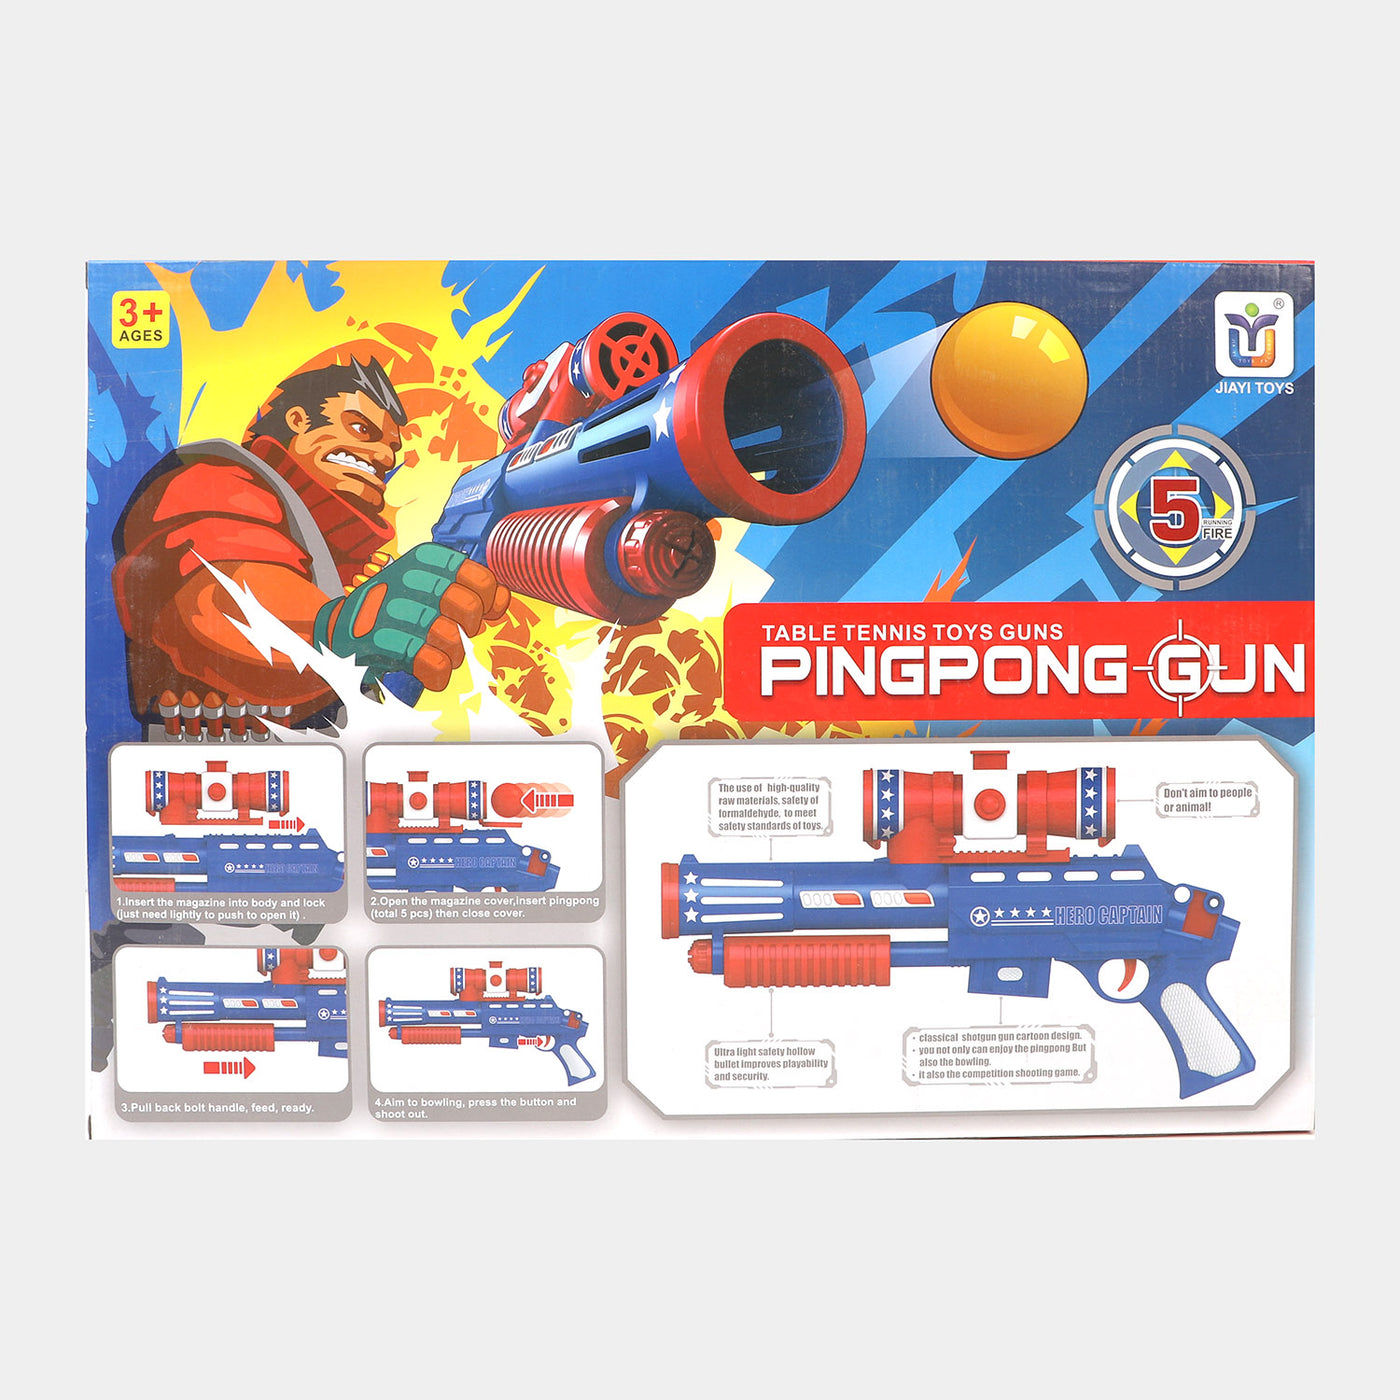 Hero Captain Ping Pong Blaster